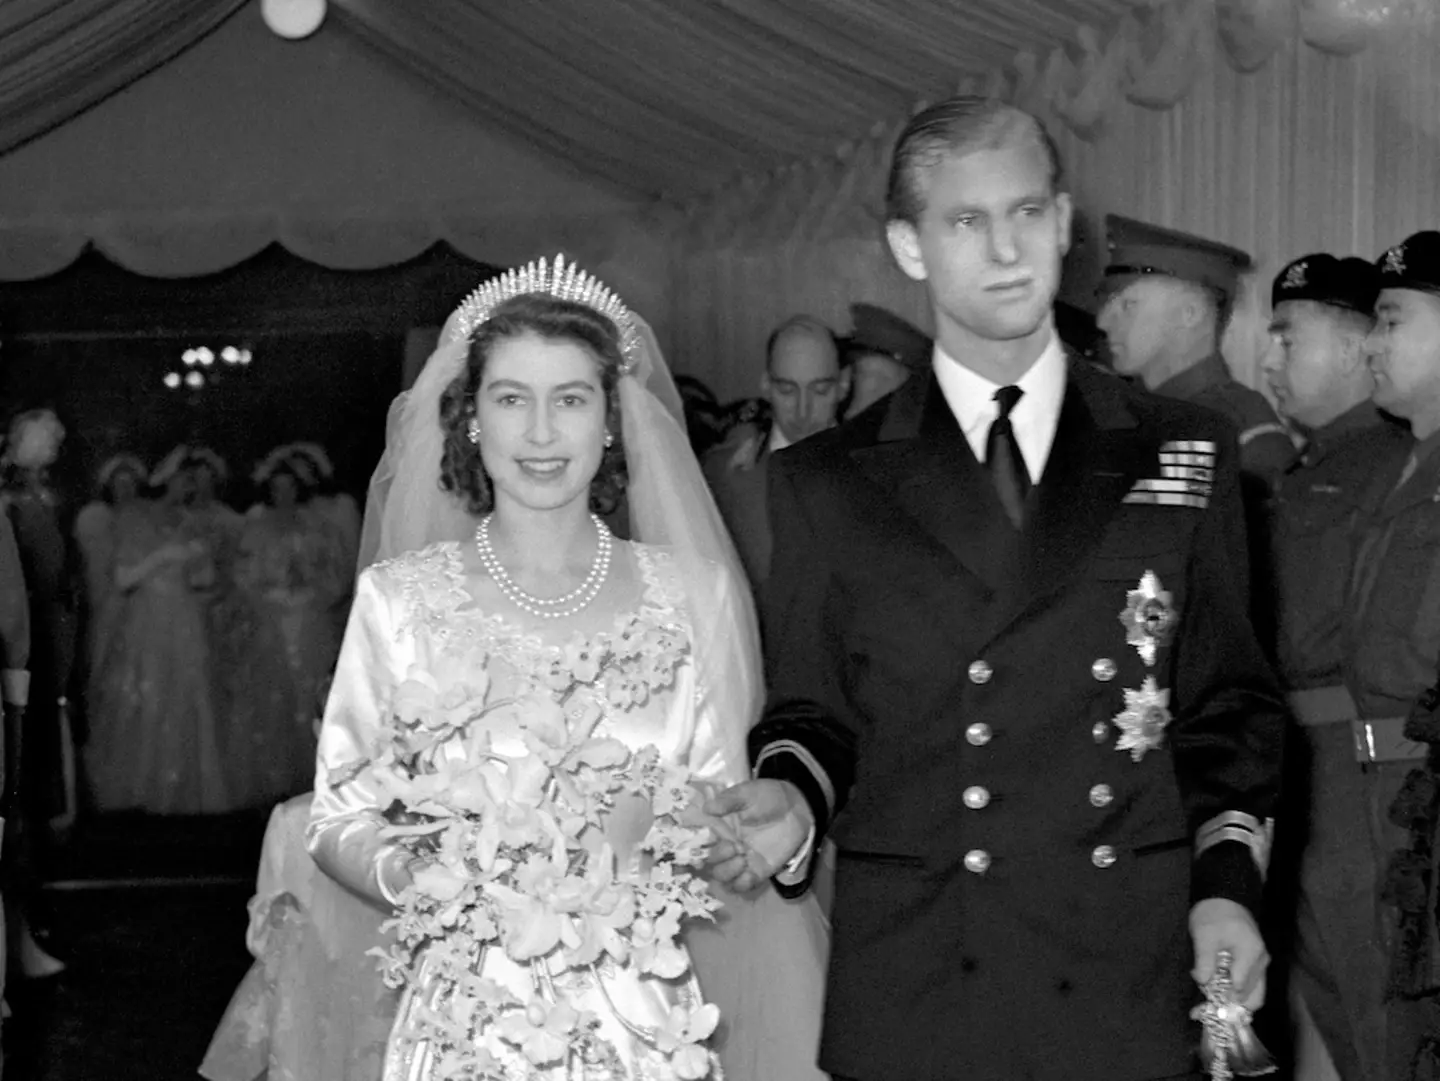 Prince Philip and Queen Elizabeth II married in 1947.